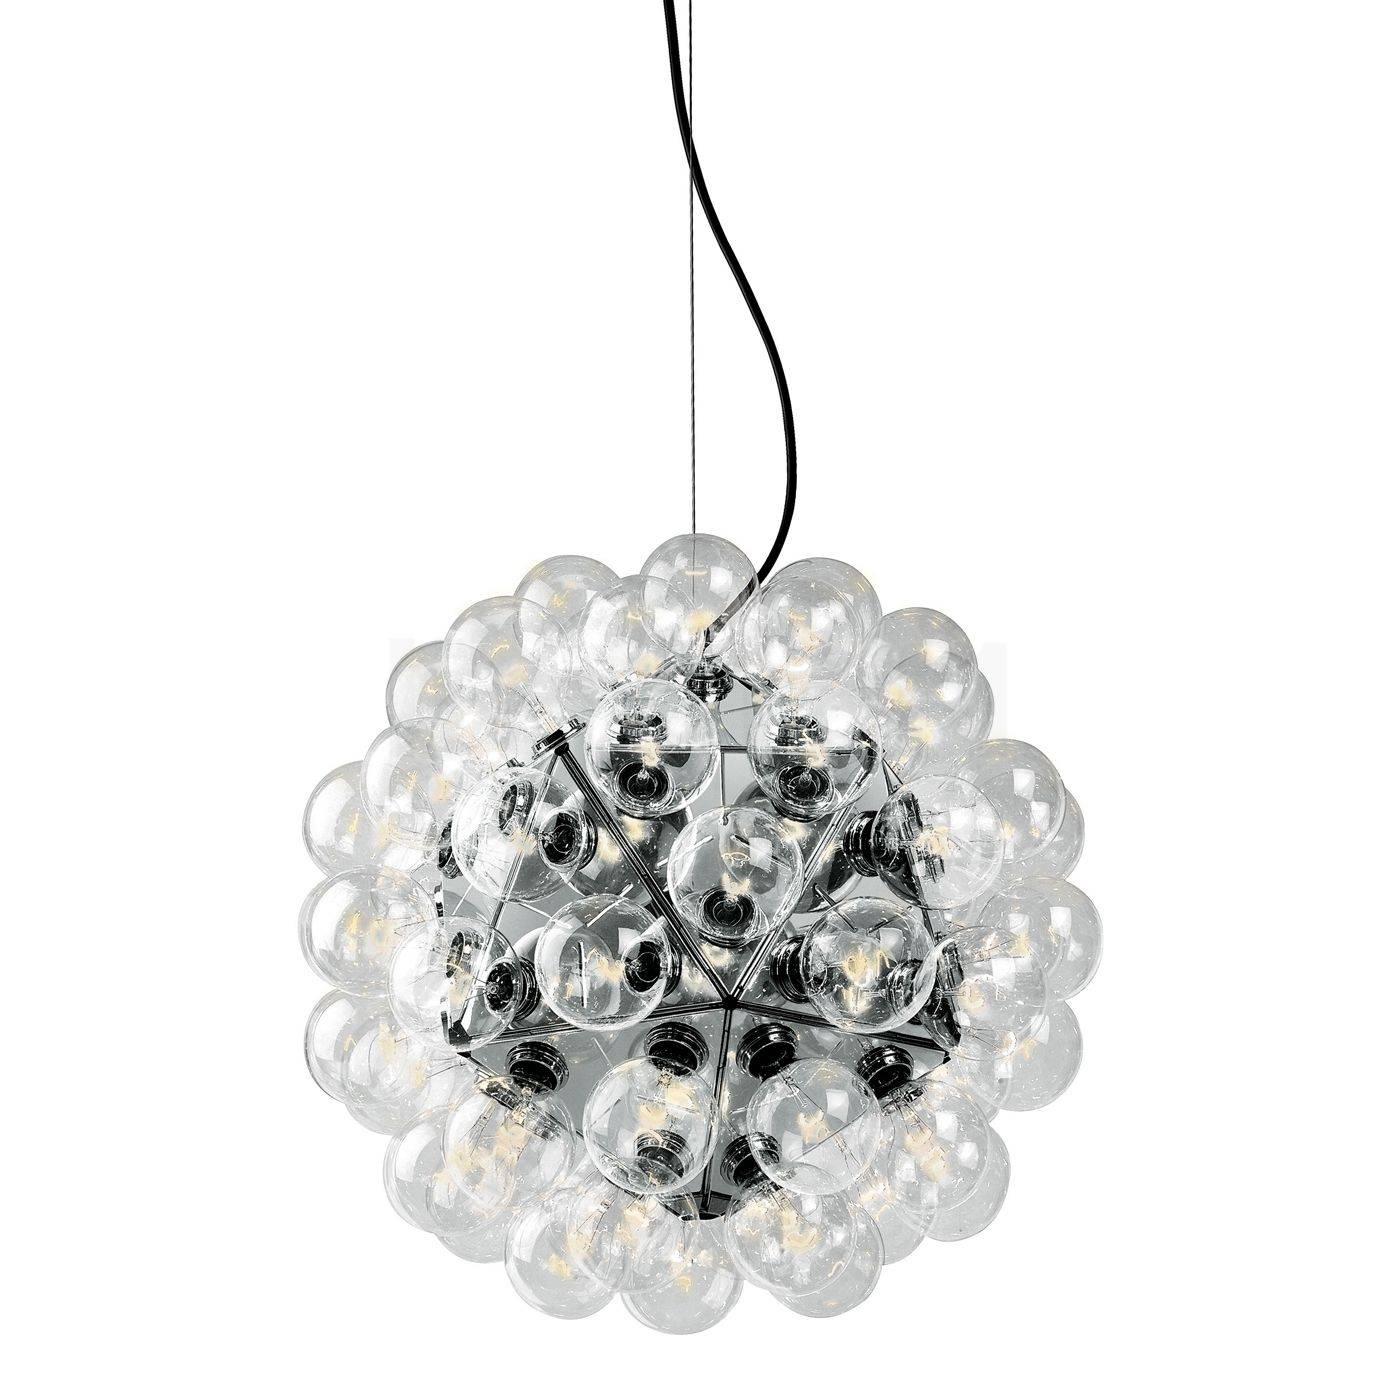 Modern Flos Taraxacum 88 Suspension Pendant Lamp by Achille & Pier Castiglioni For Sale